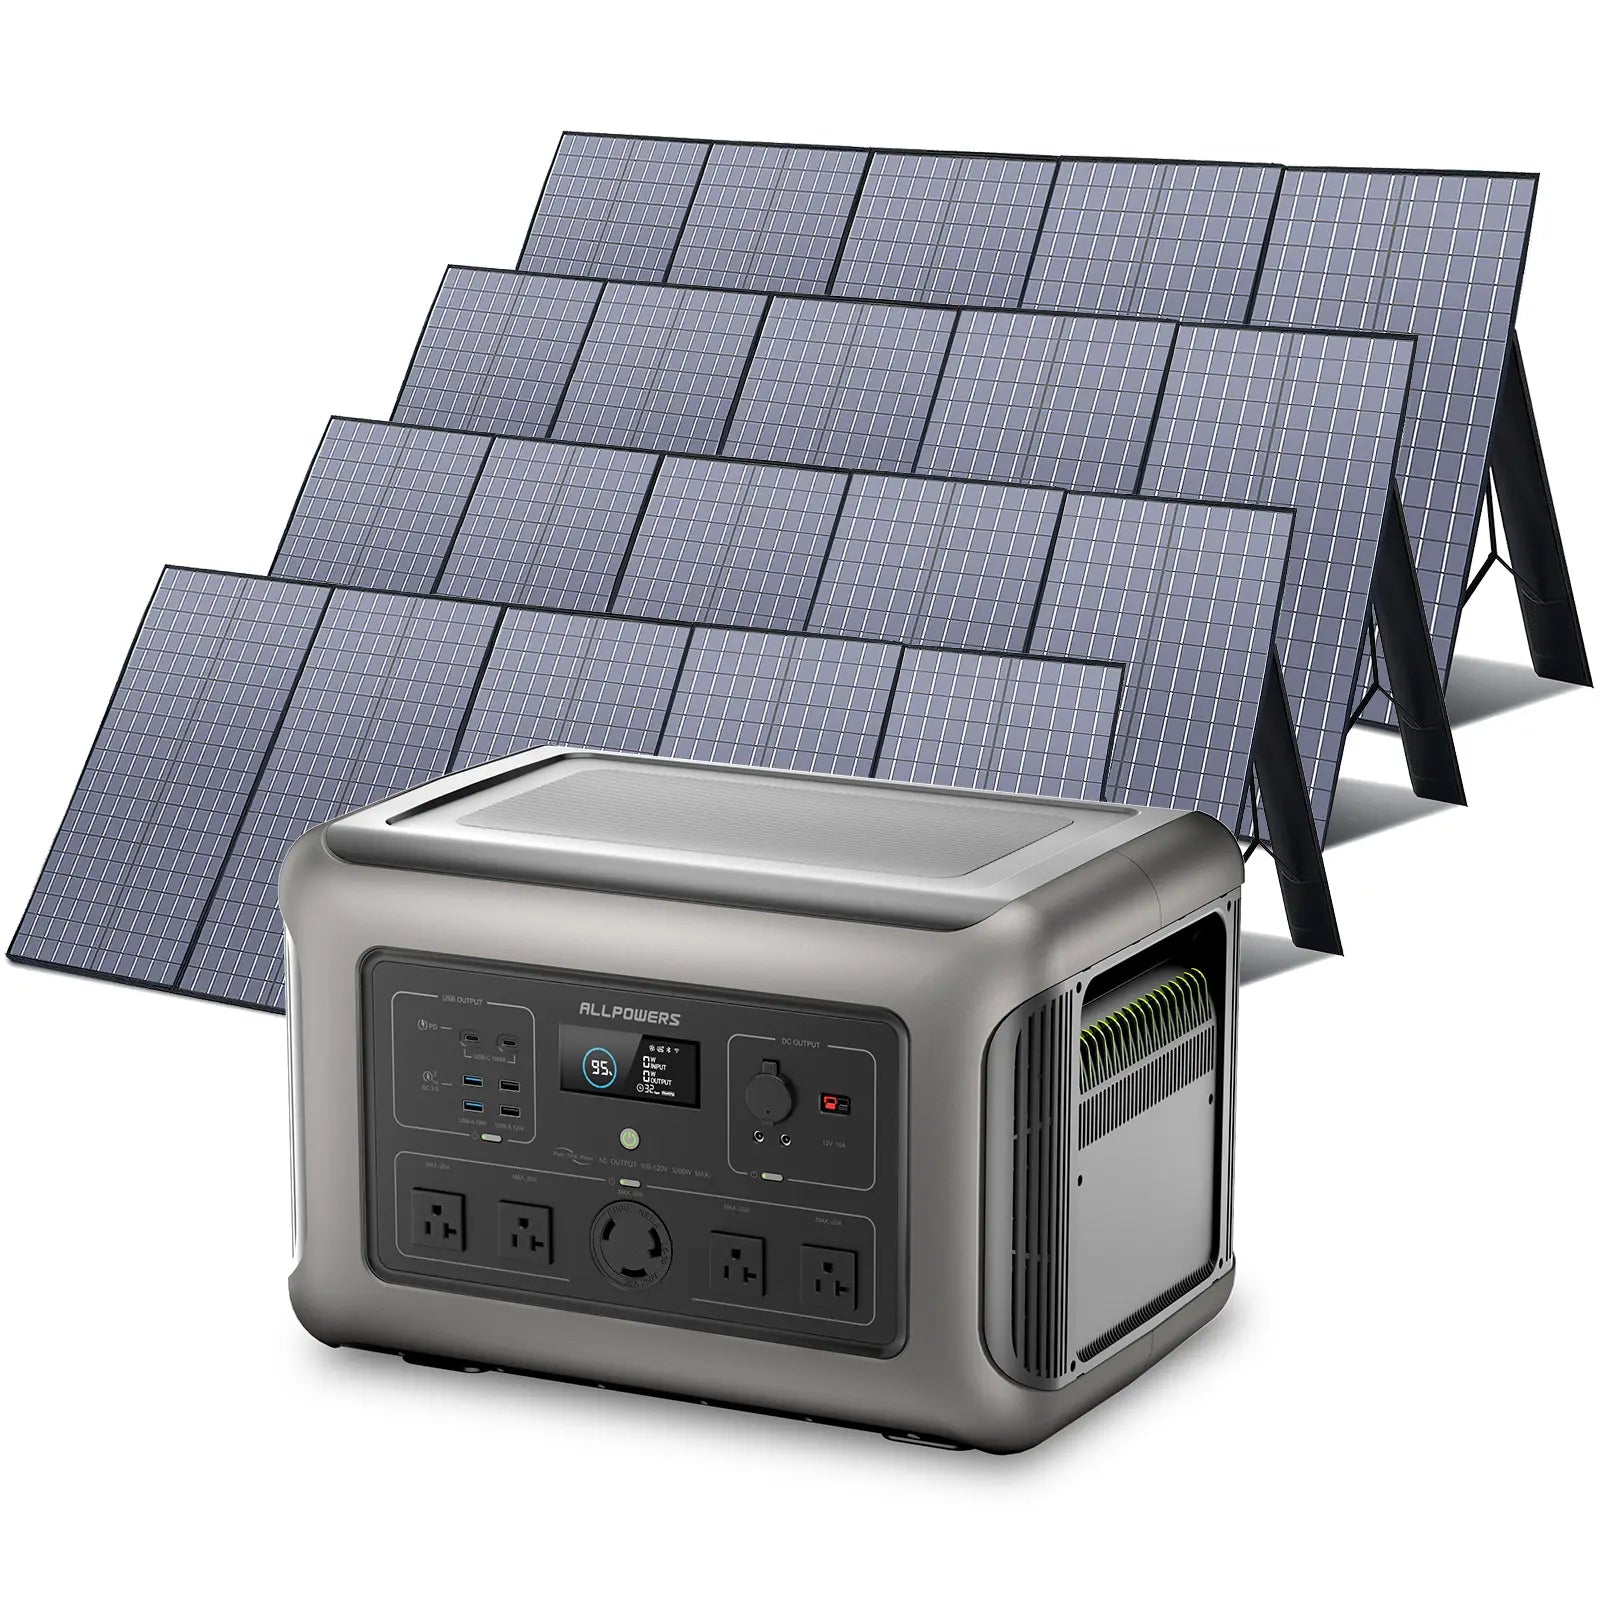 ALLPOWERS Solar Generator Kit 3200W (R3500 + 4 x SP037 400W Solar Panel)